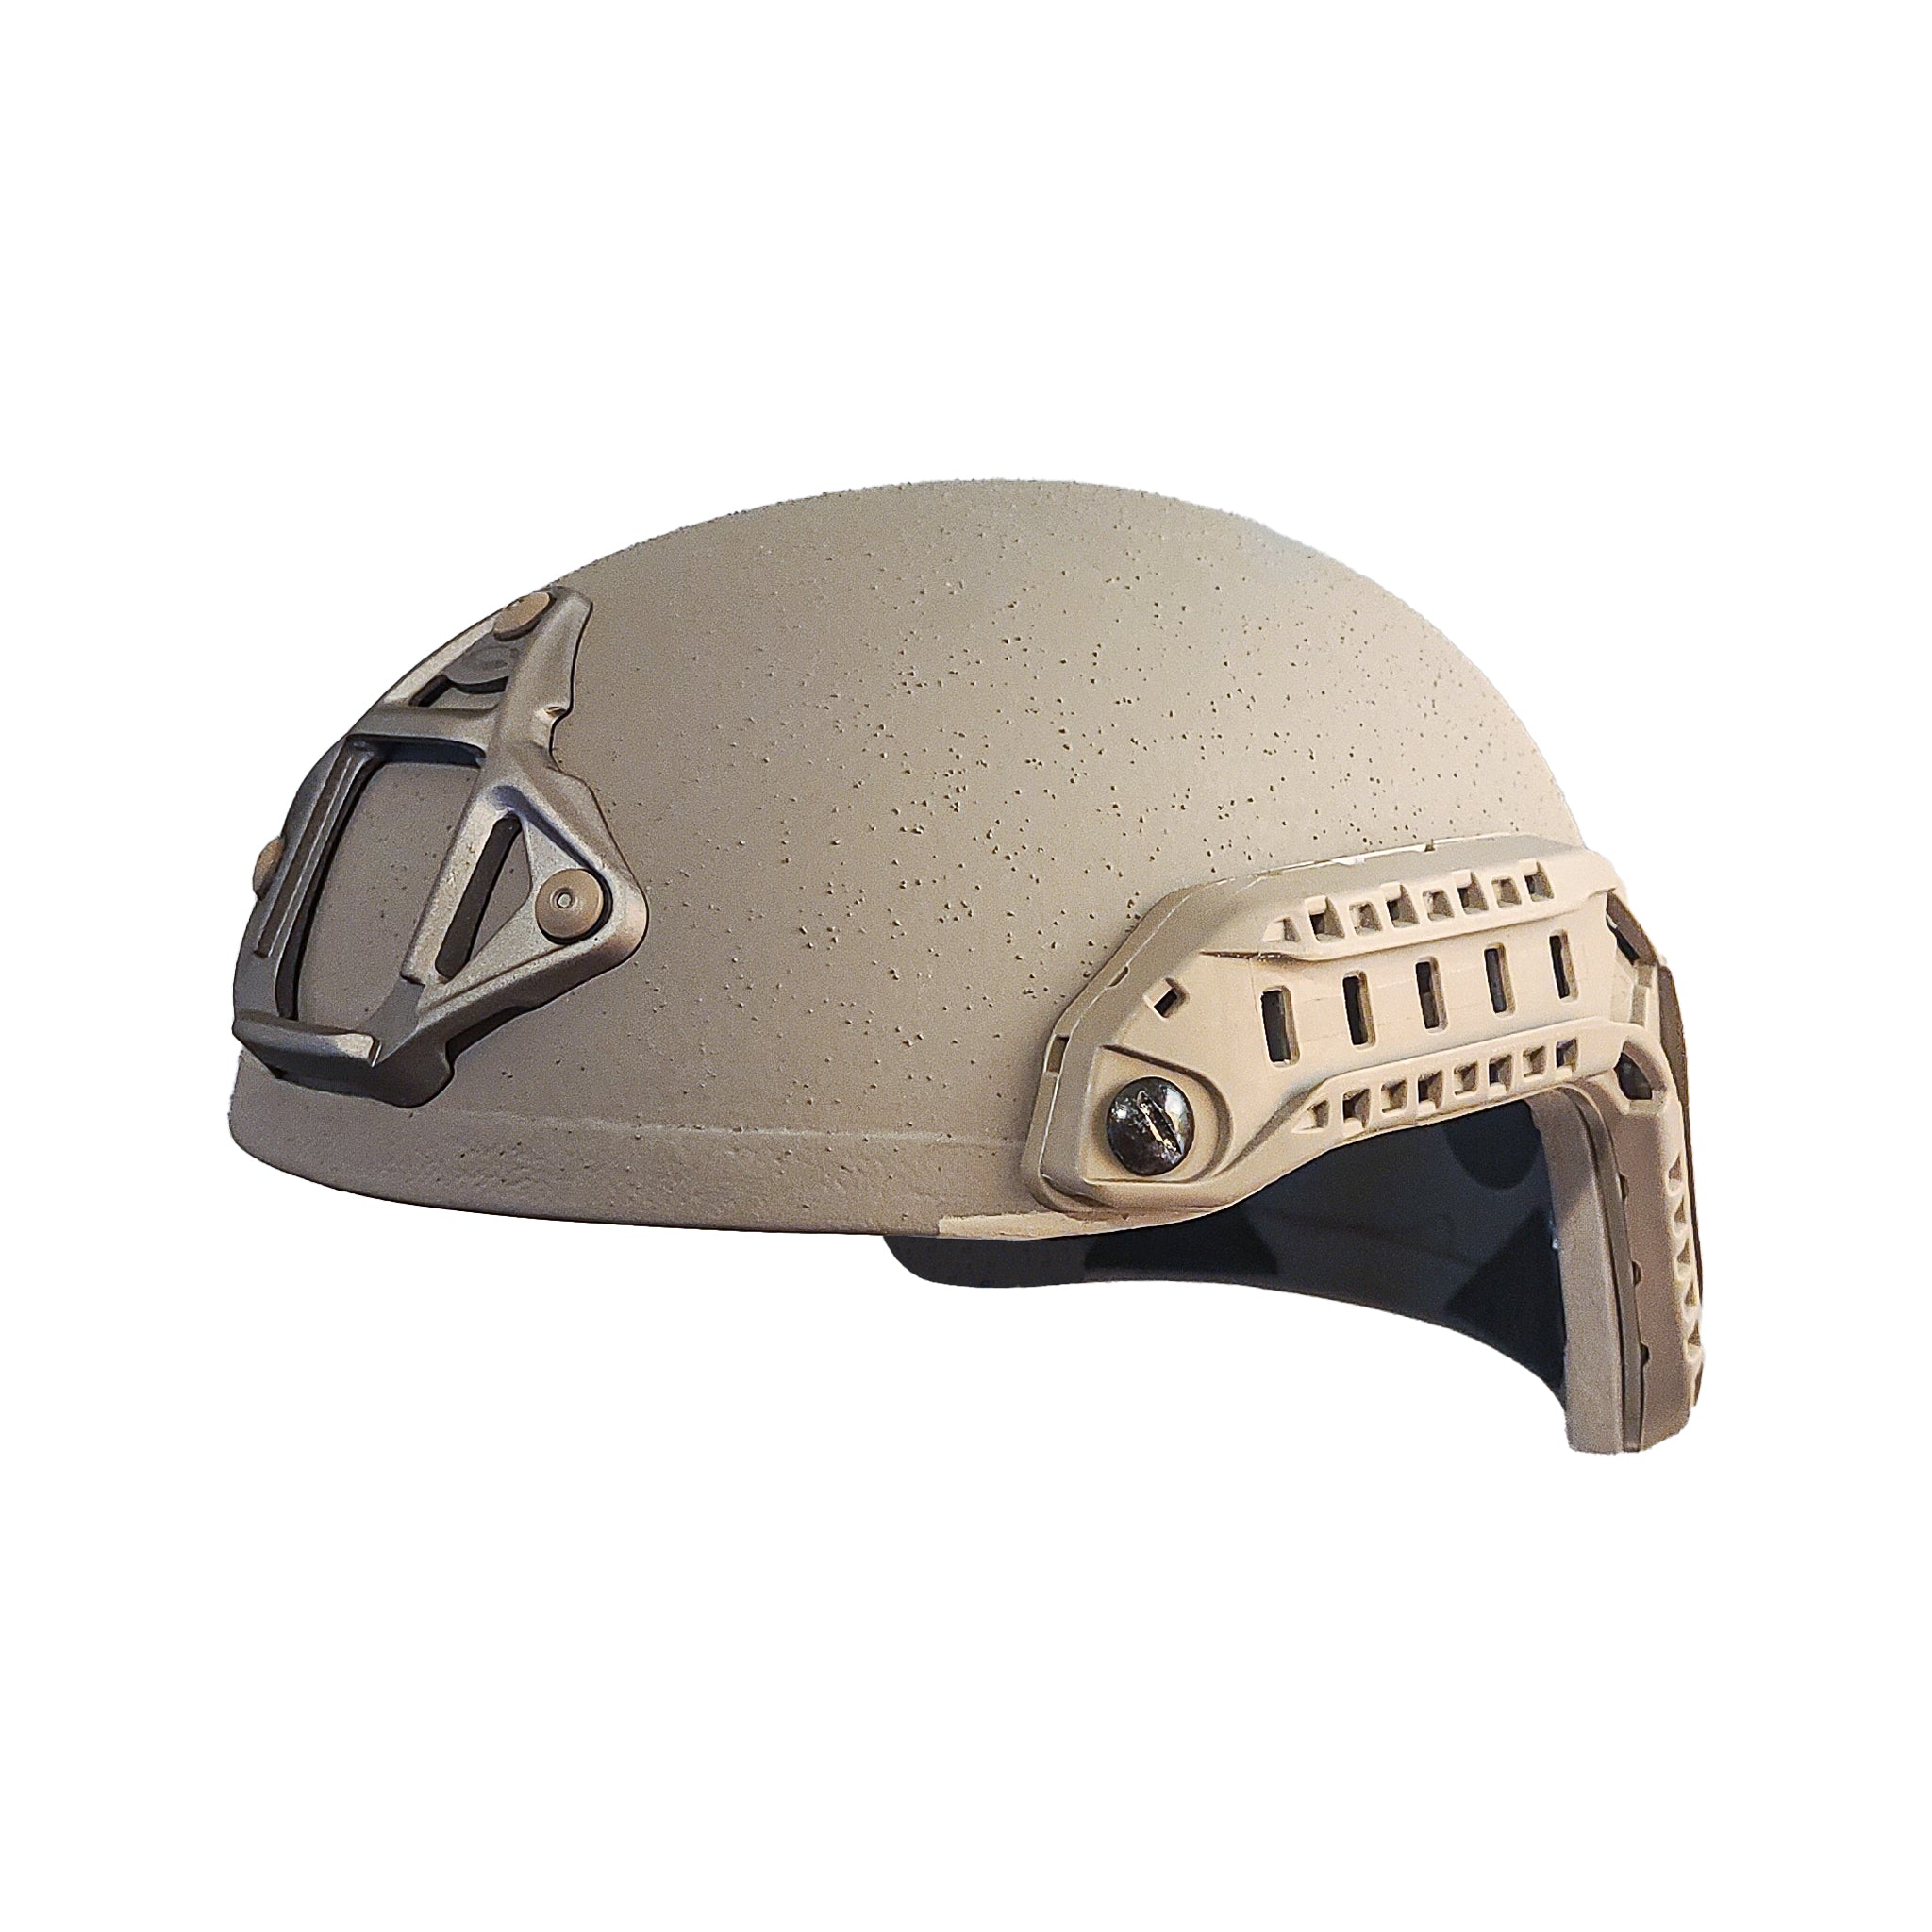 Helmet Modification Service